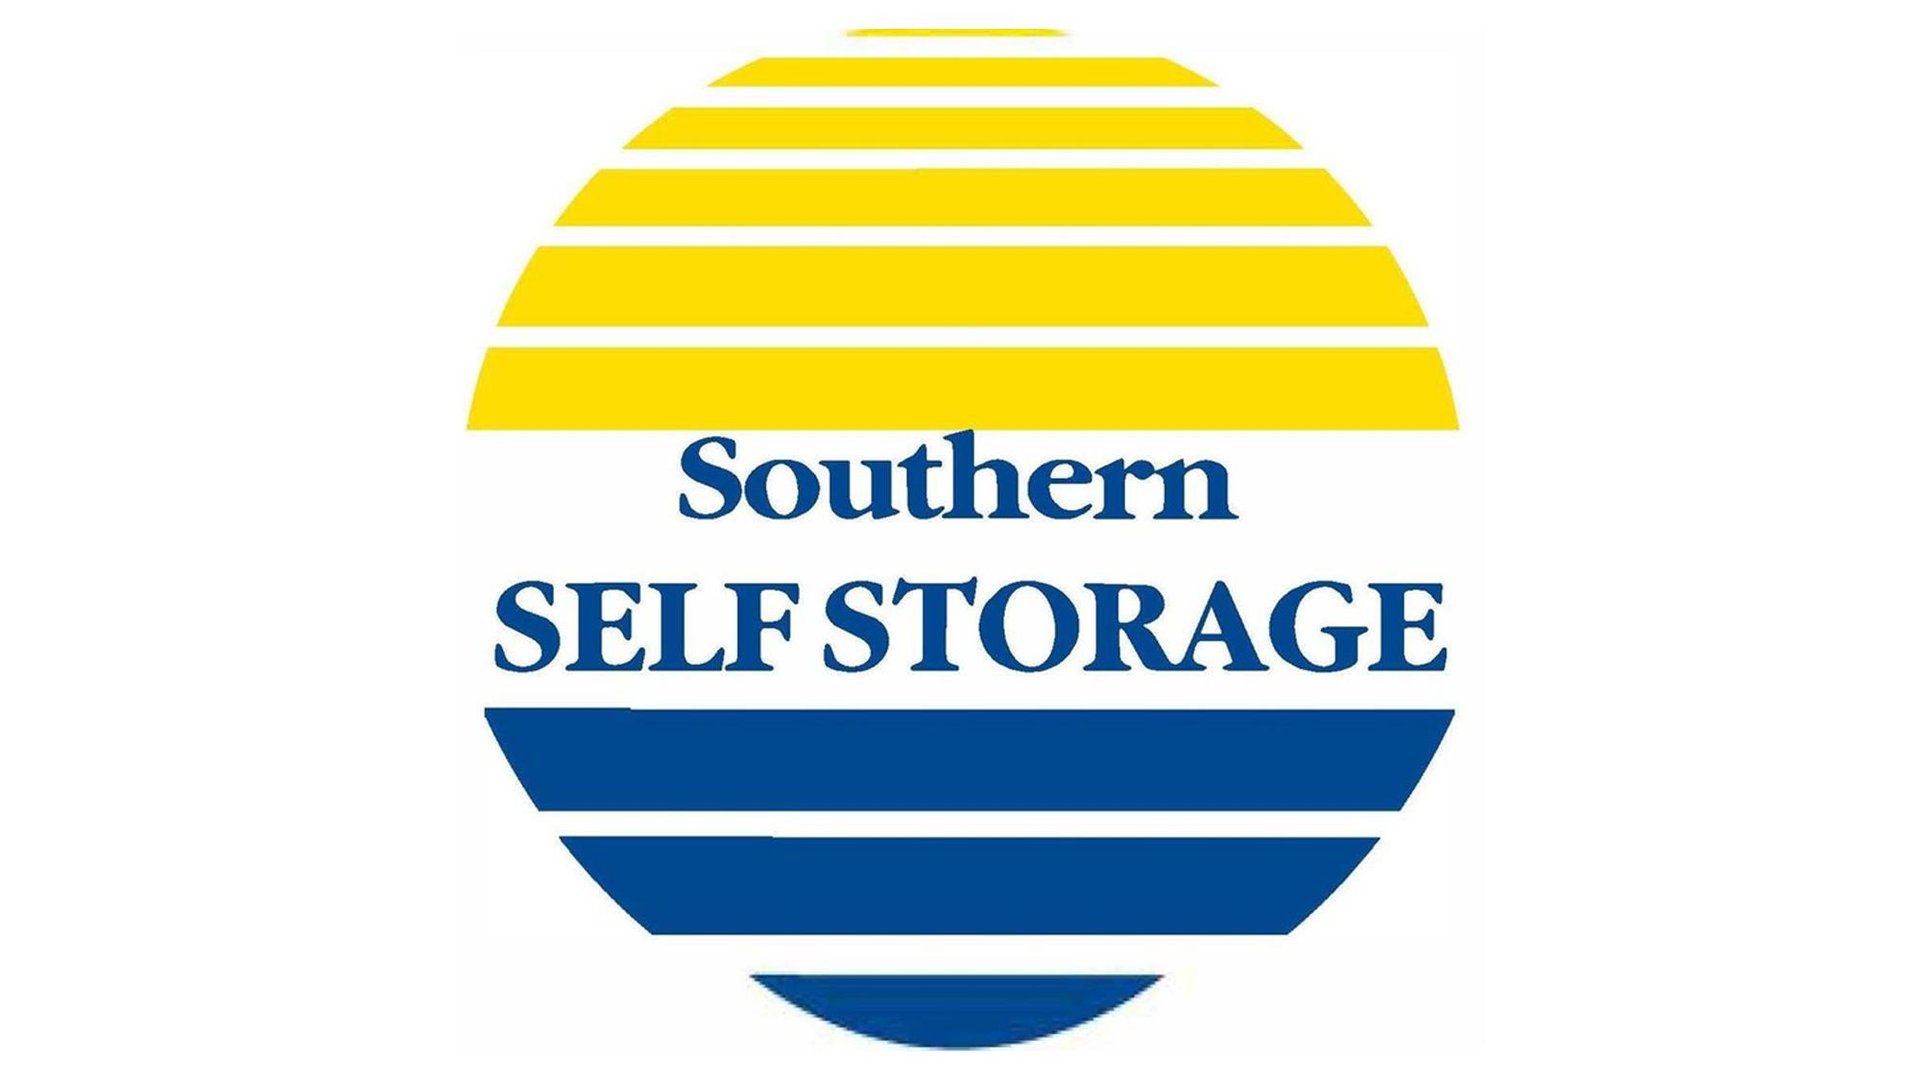 Southern Self Storage